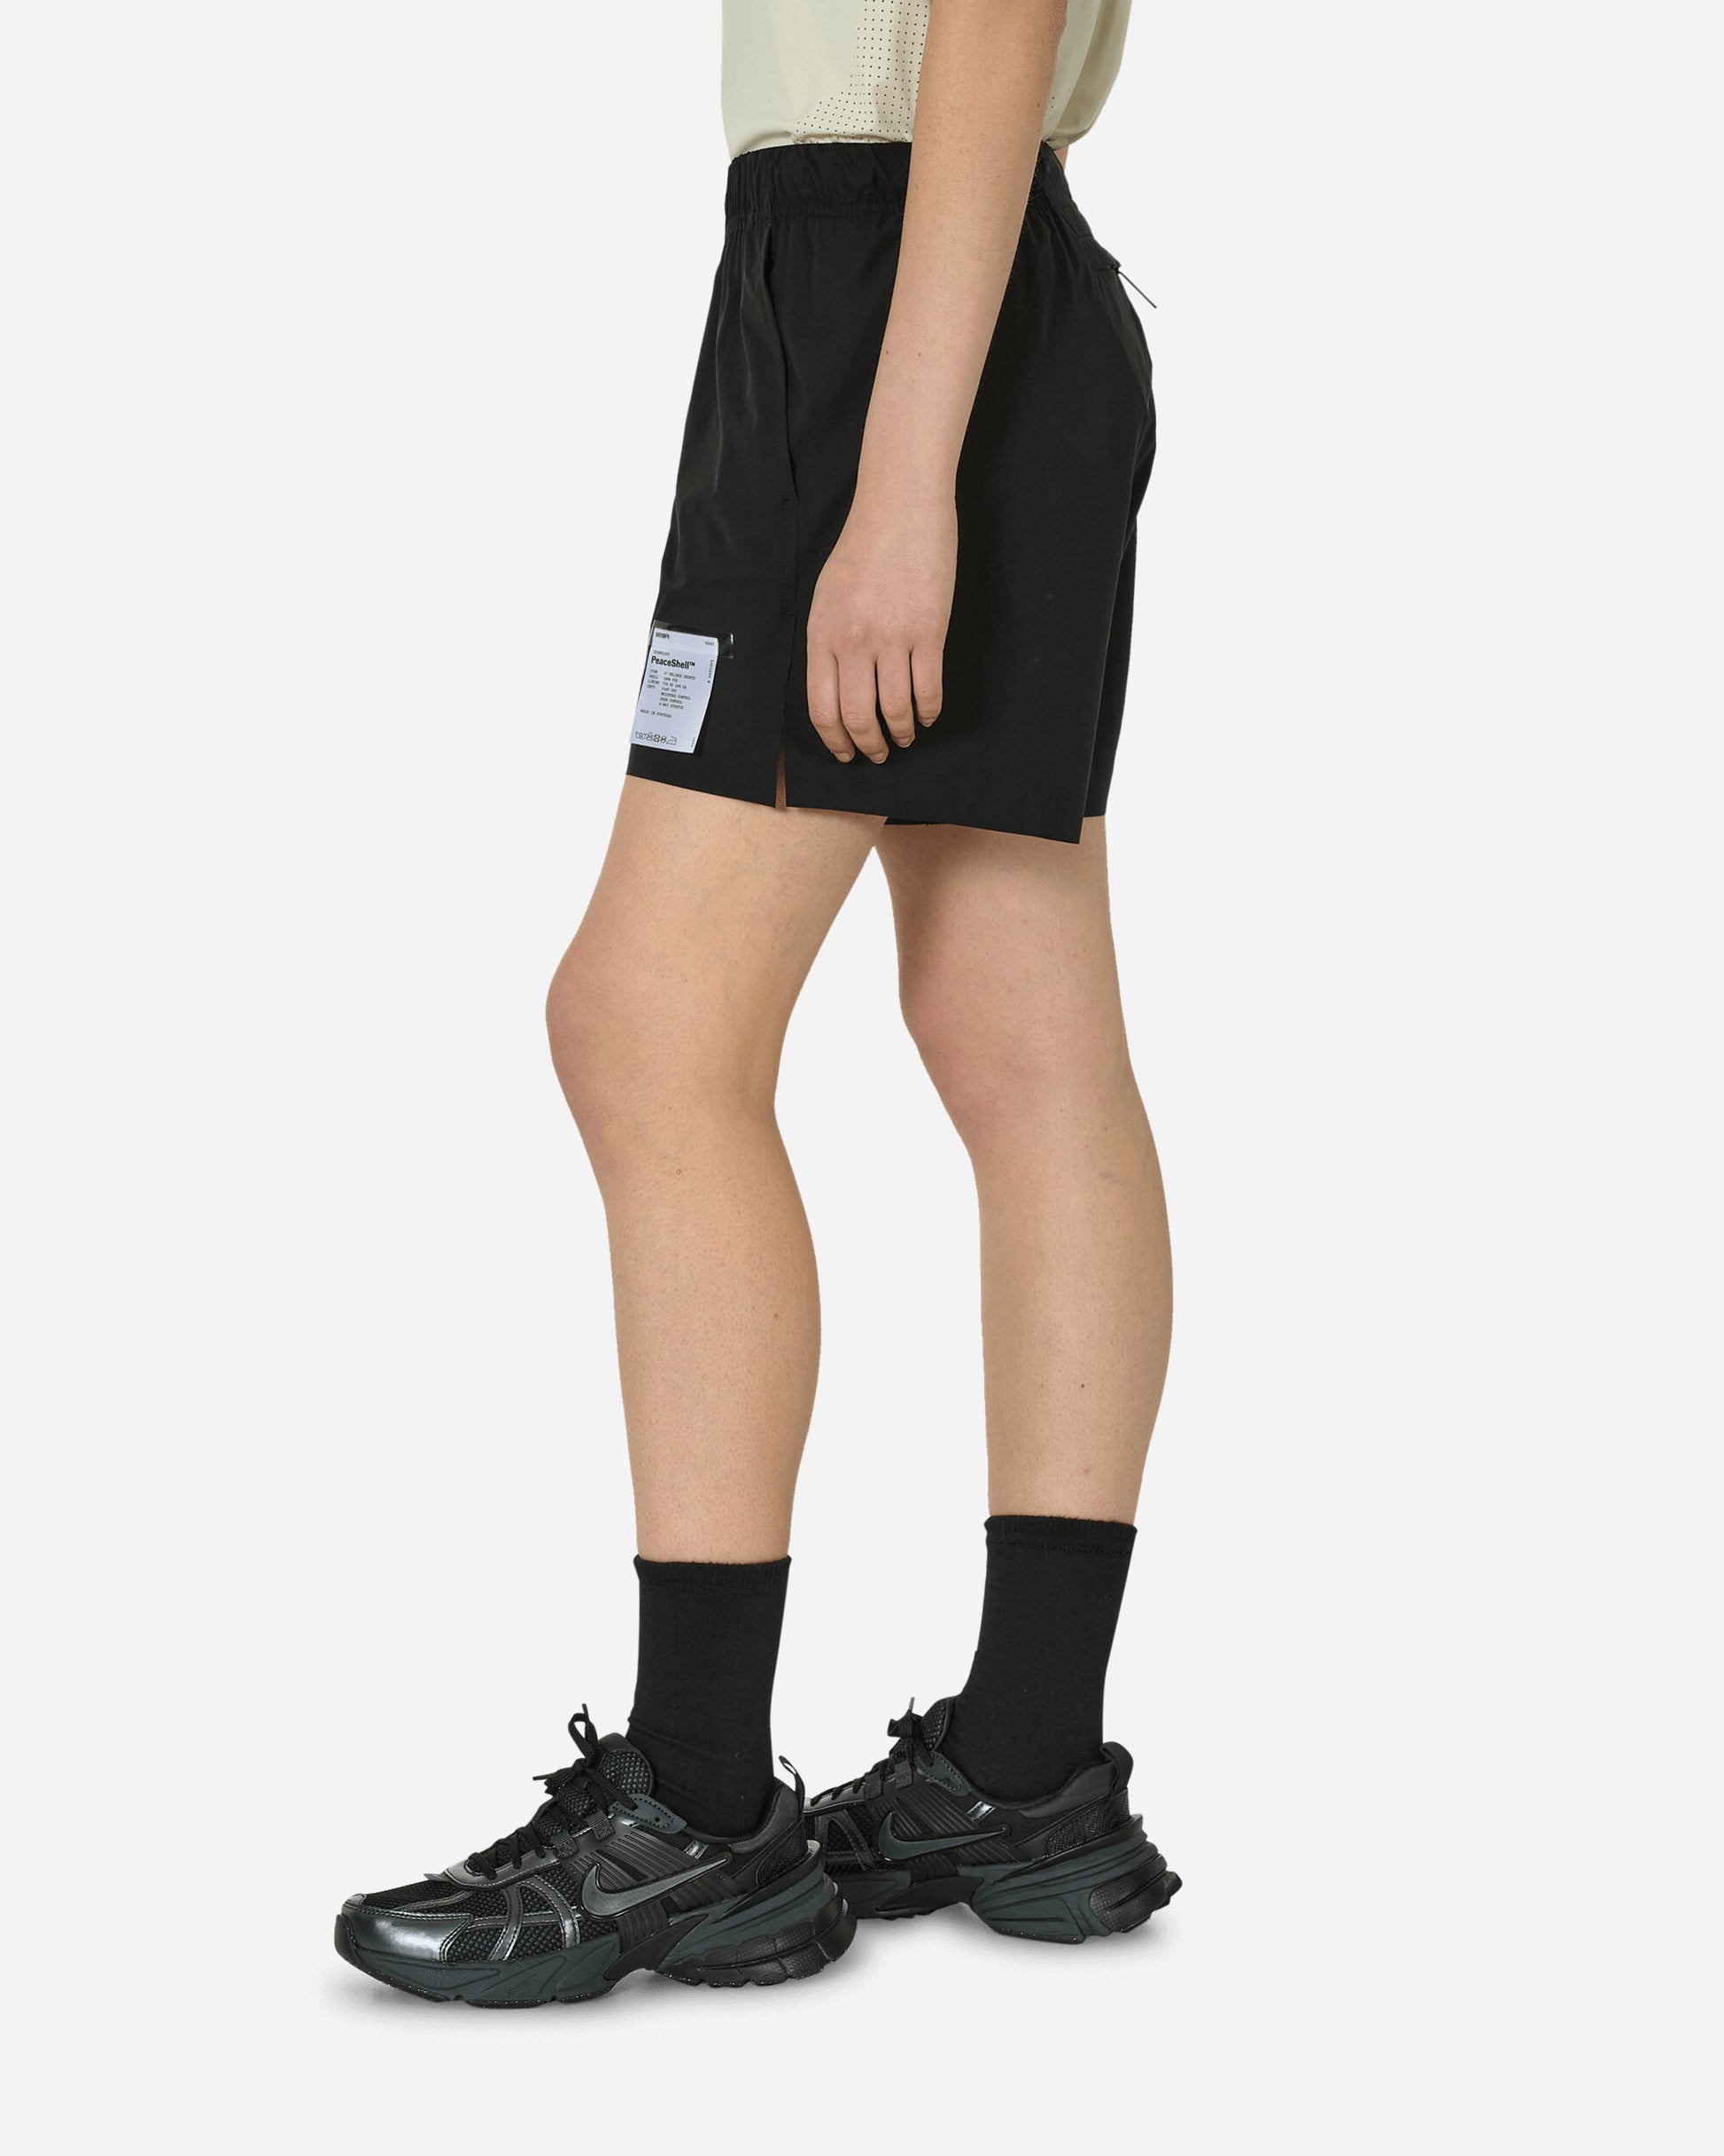 Satisfy Peaceshell 5" Unlined Shorts Black Shorts Short 5337 BK-CO